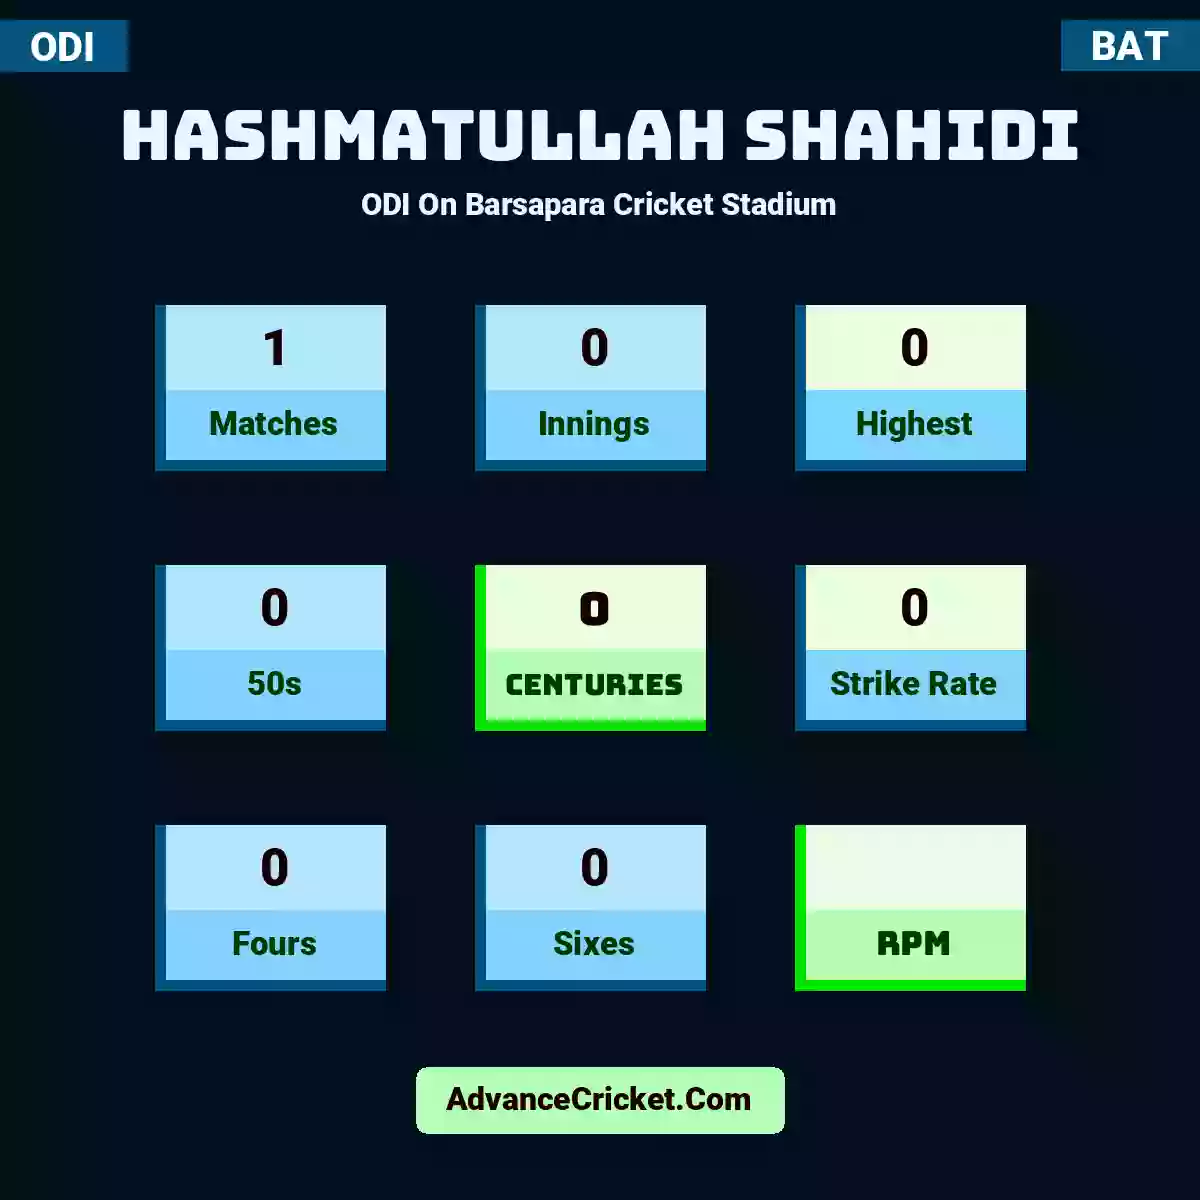 Hashmatullah Shahidi ODI  On Barsapara Cricket Stadium, Hashmatullah Shahidi played 1 matches, scored 0 runs as highest, 0 half-centuries, and 0 centuries, with a strike rate of 0. H.Shahidi hit 0 fours and 0 sixes.